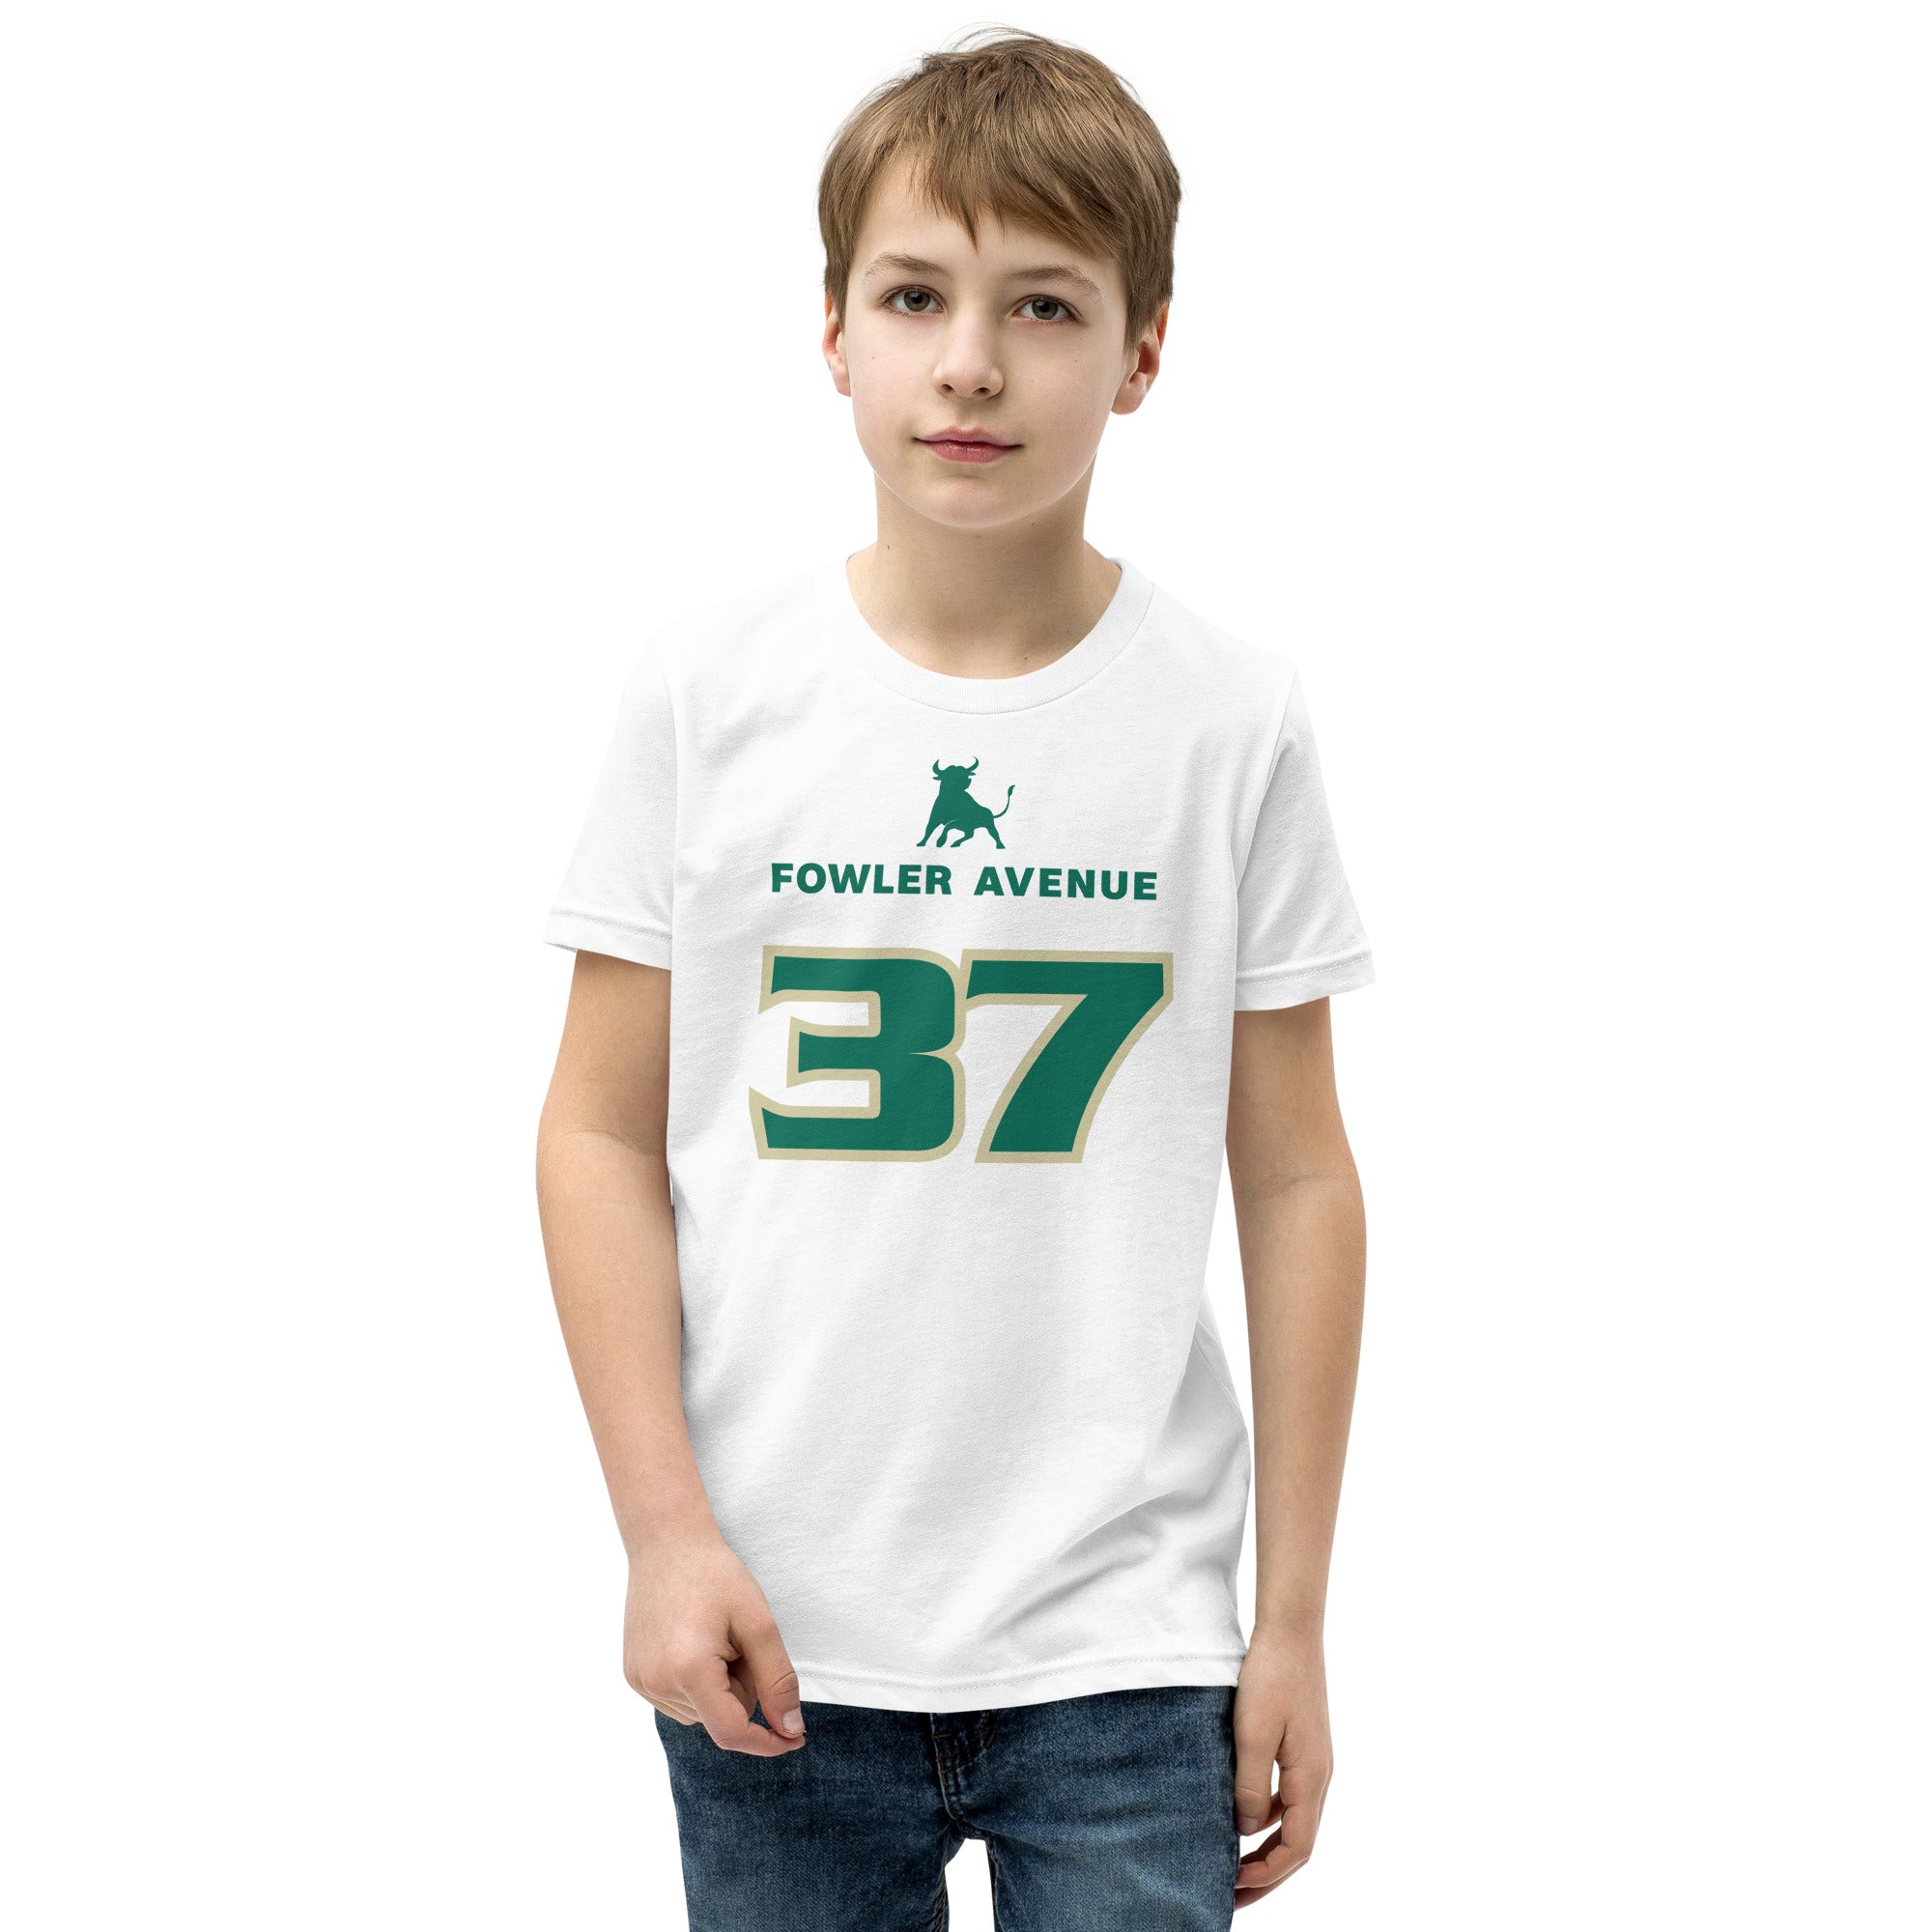 #37 Logan Berryhill - Youth Jersey Shirt